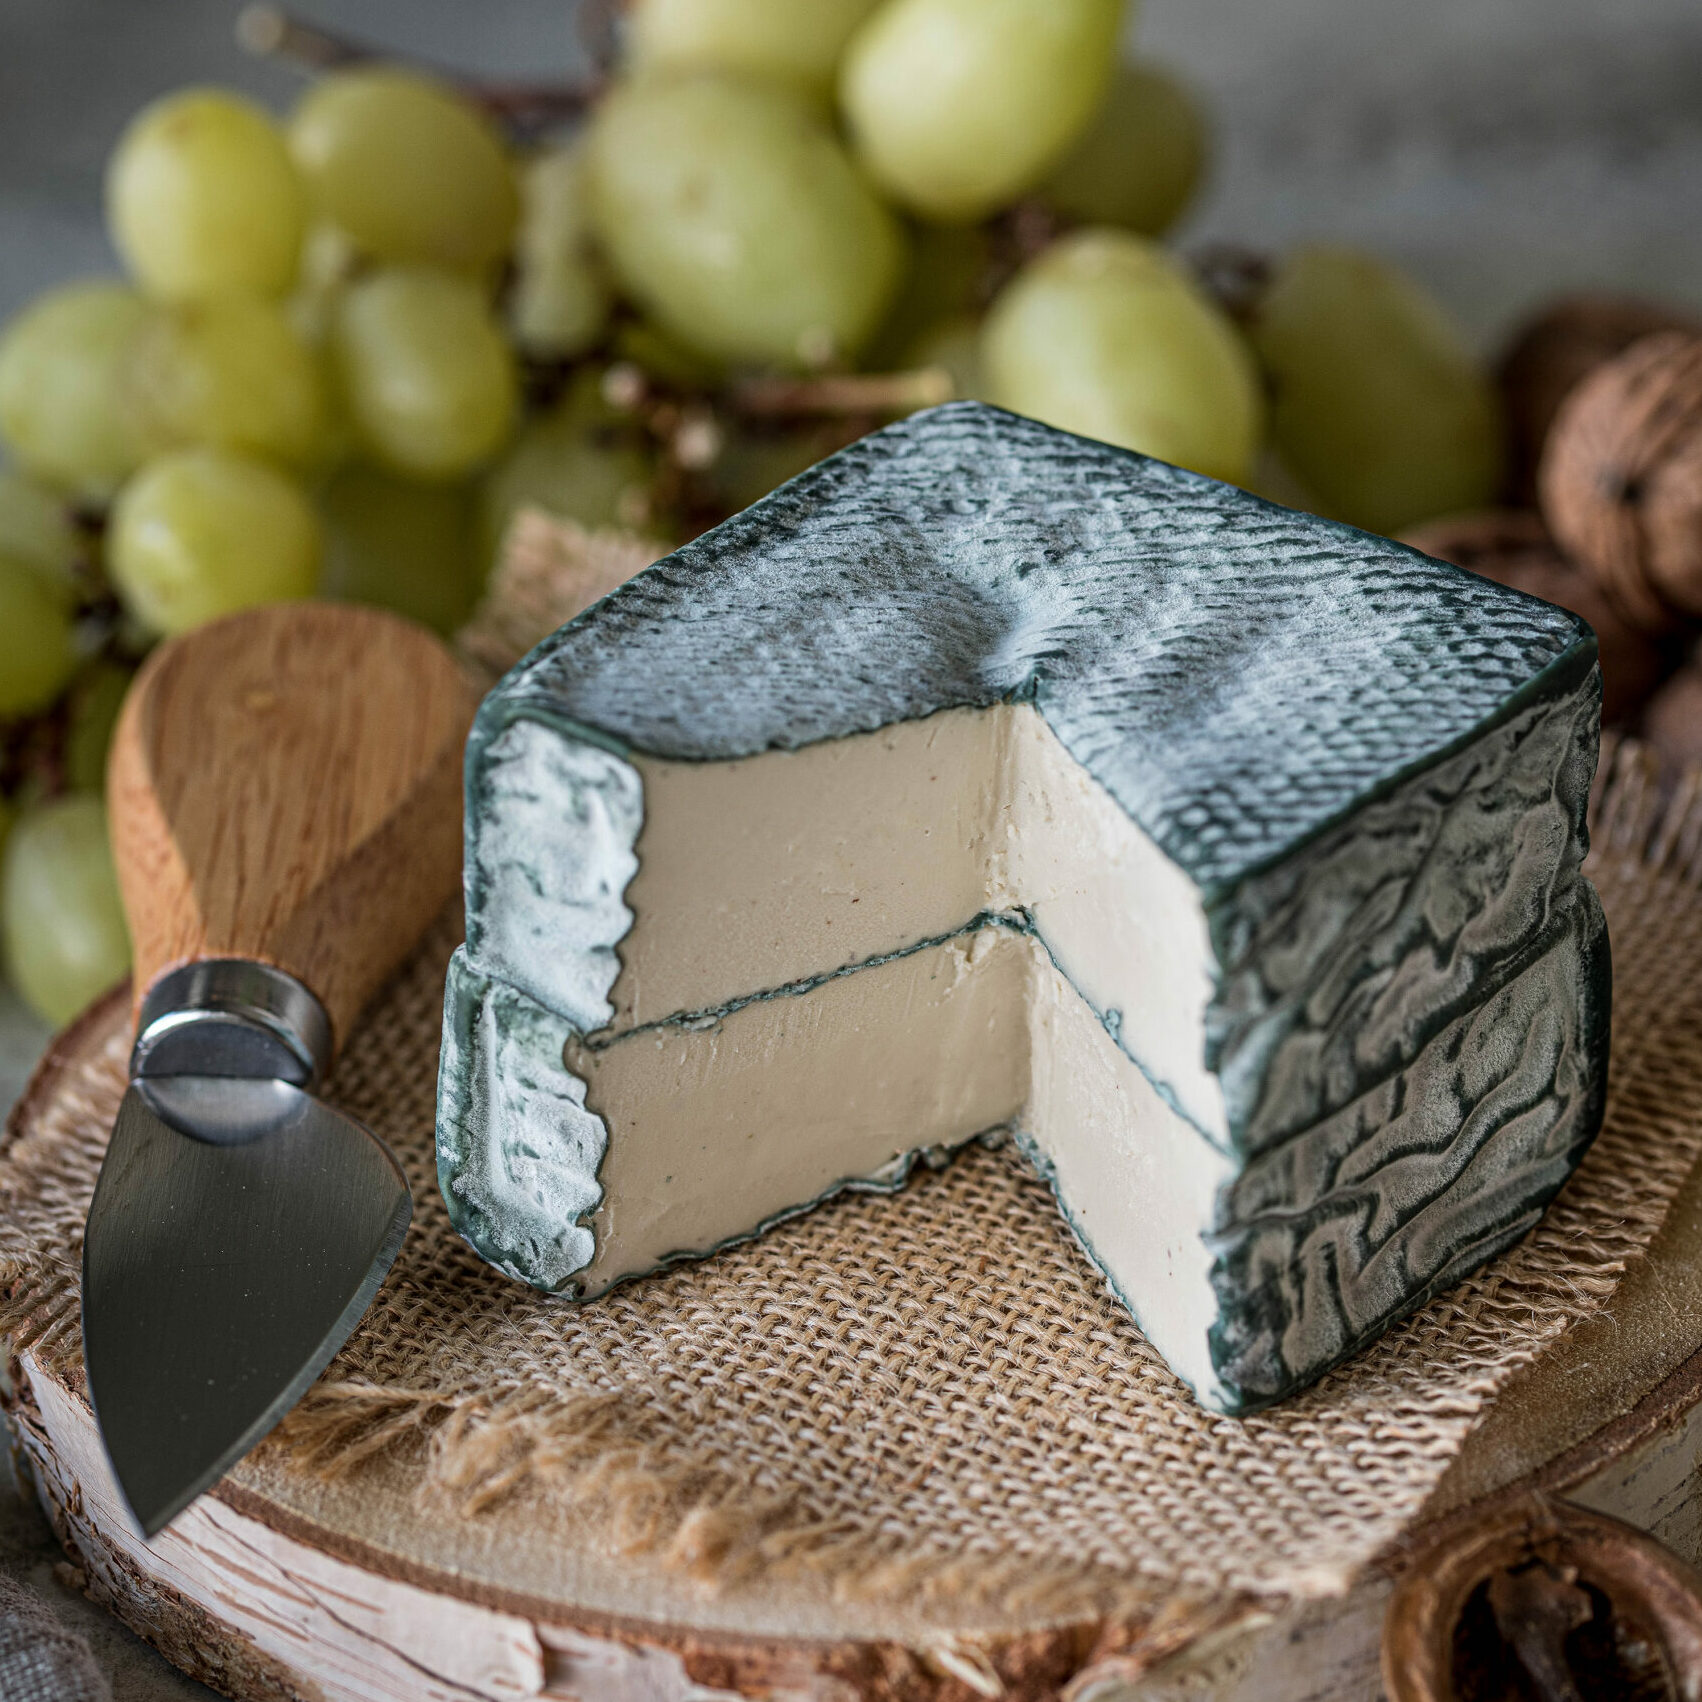 pebeyec tyk vegan belgique fromage kaas cheese vente